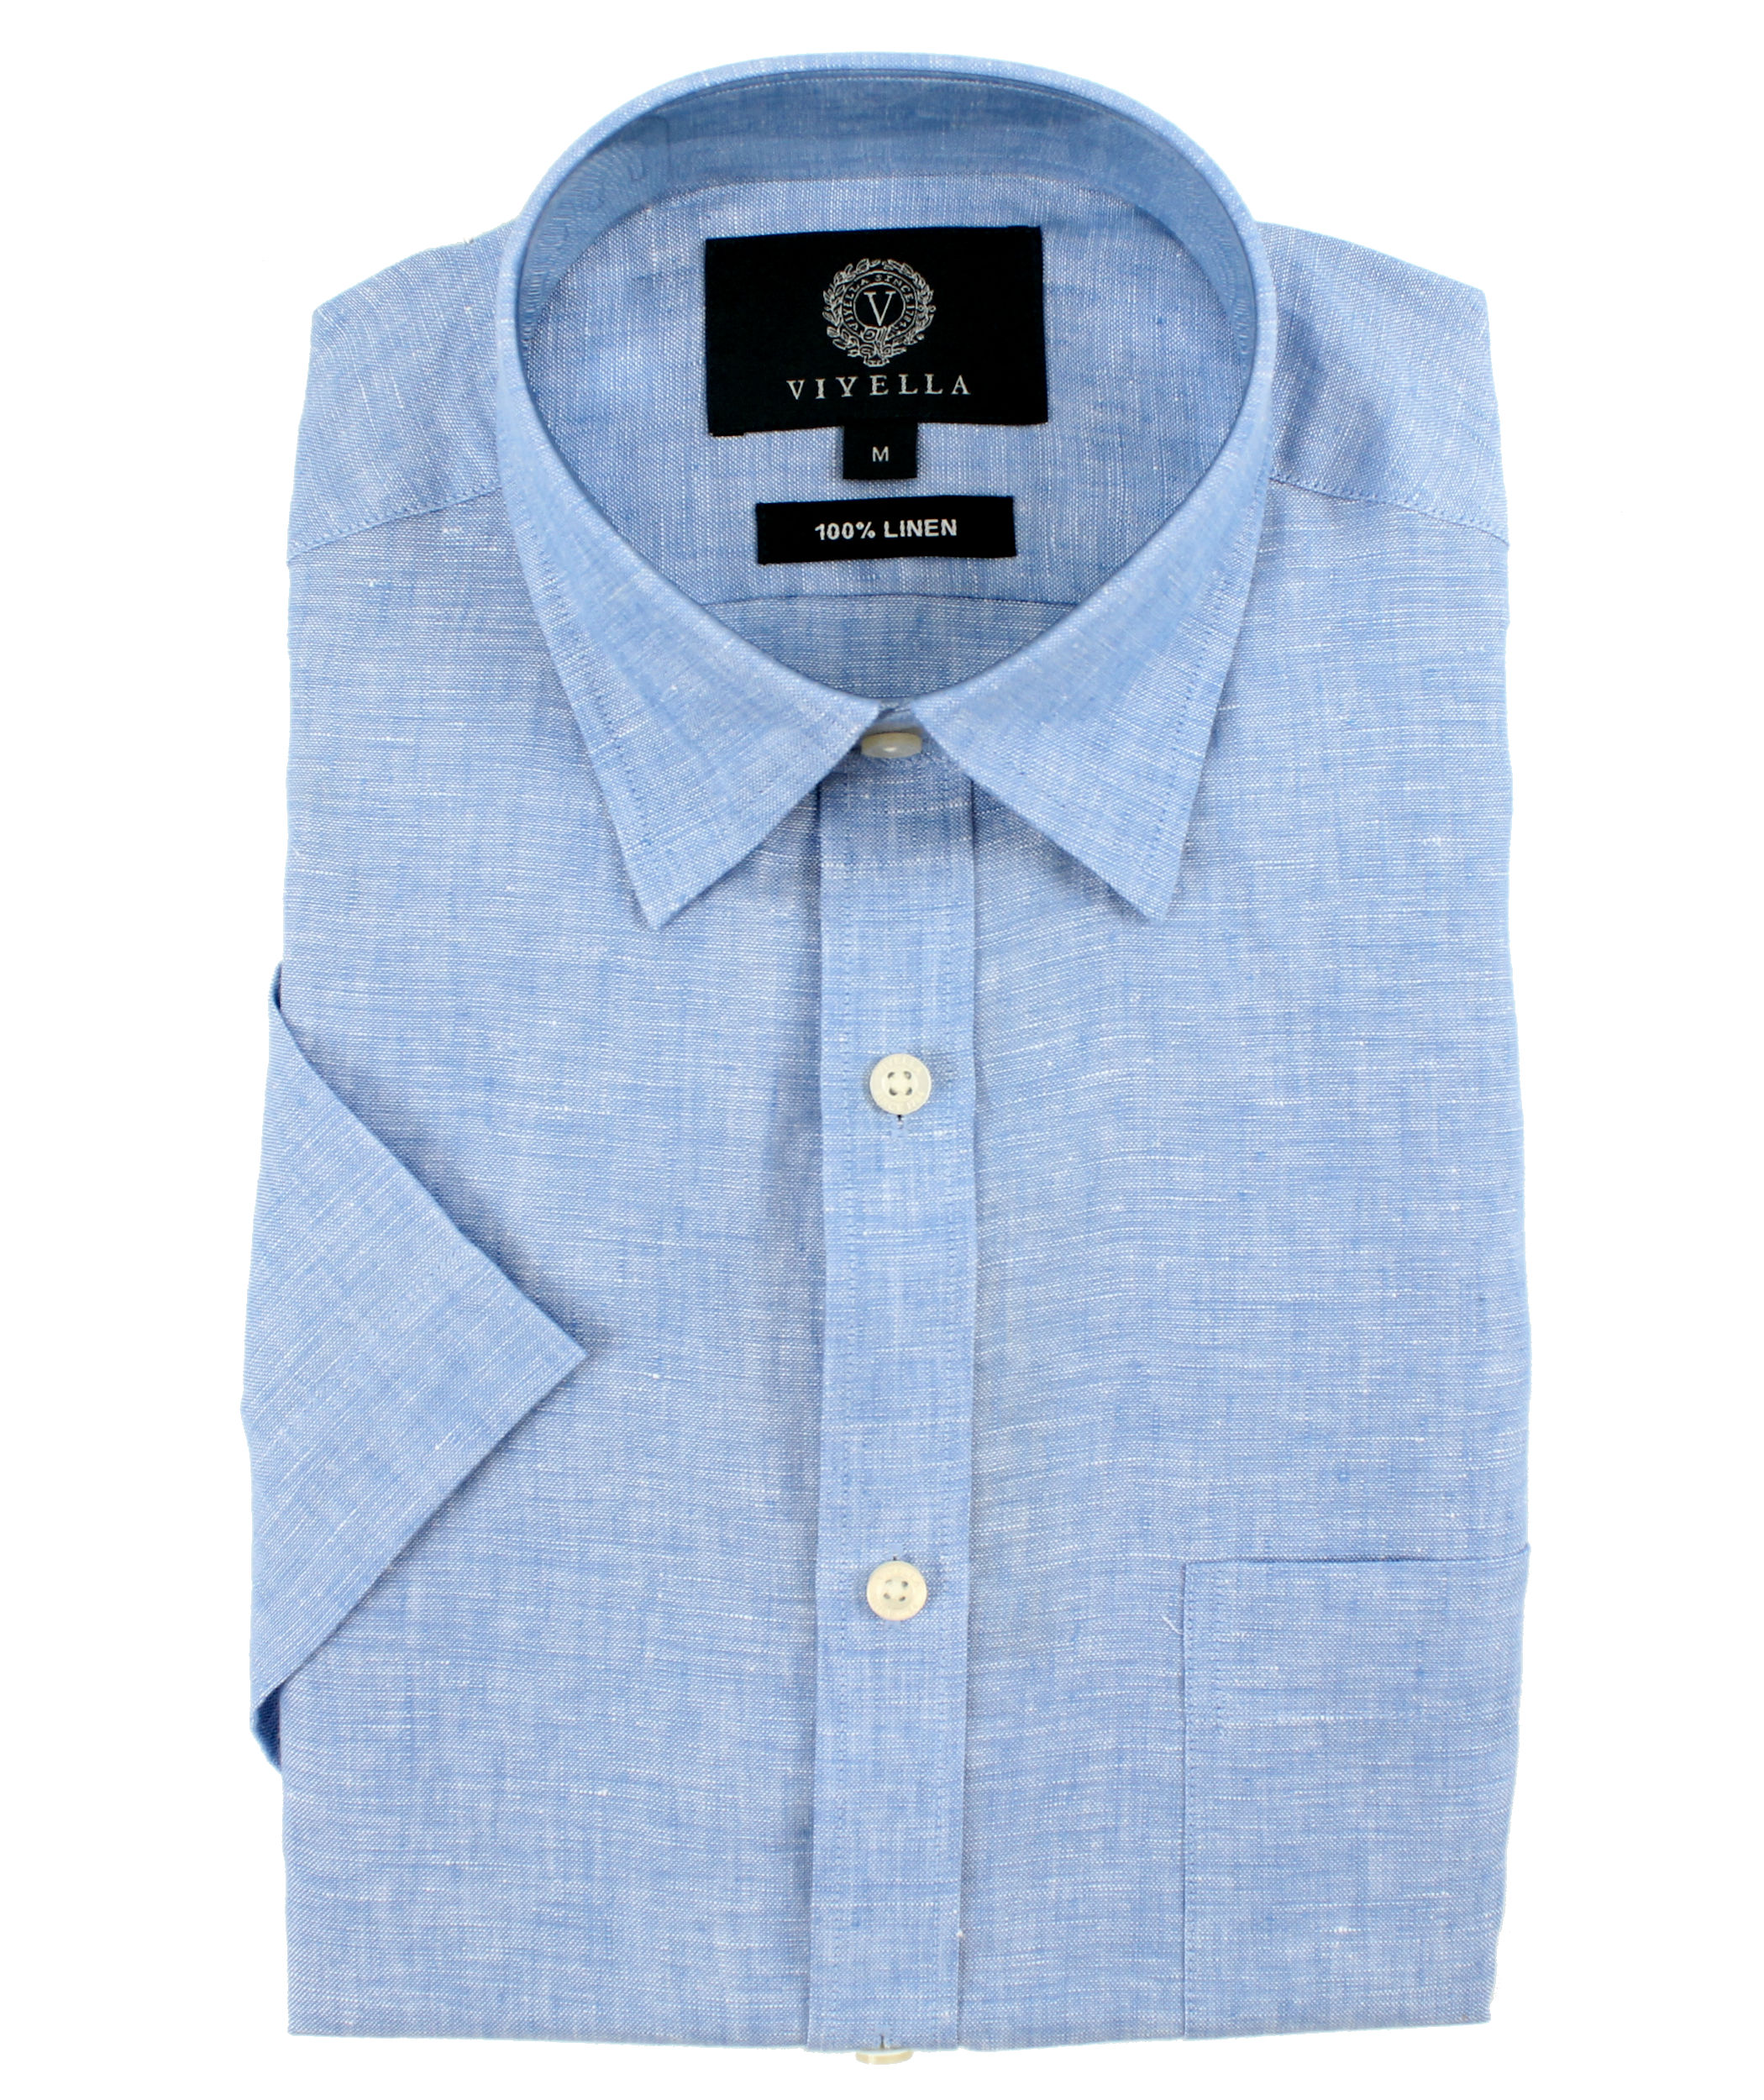 Viyella Classic Fit Plain Blue Short Sleeve Linen Shirt - Viyella